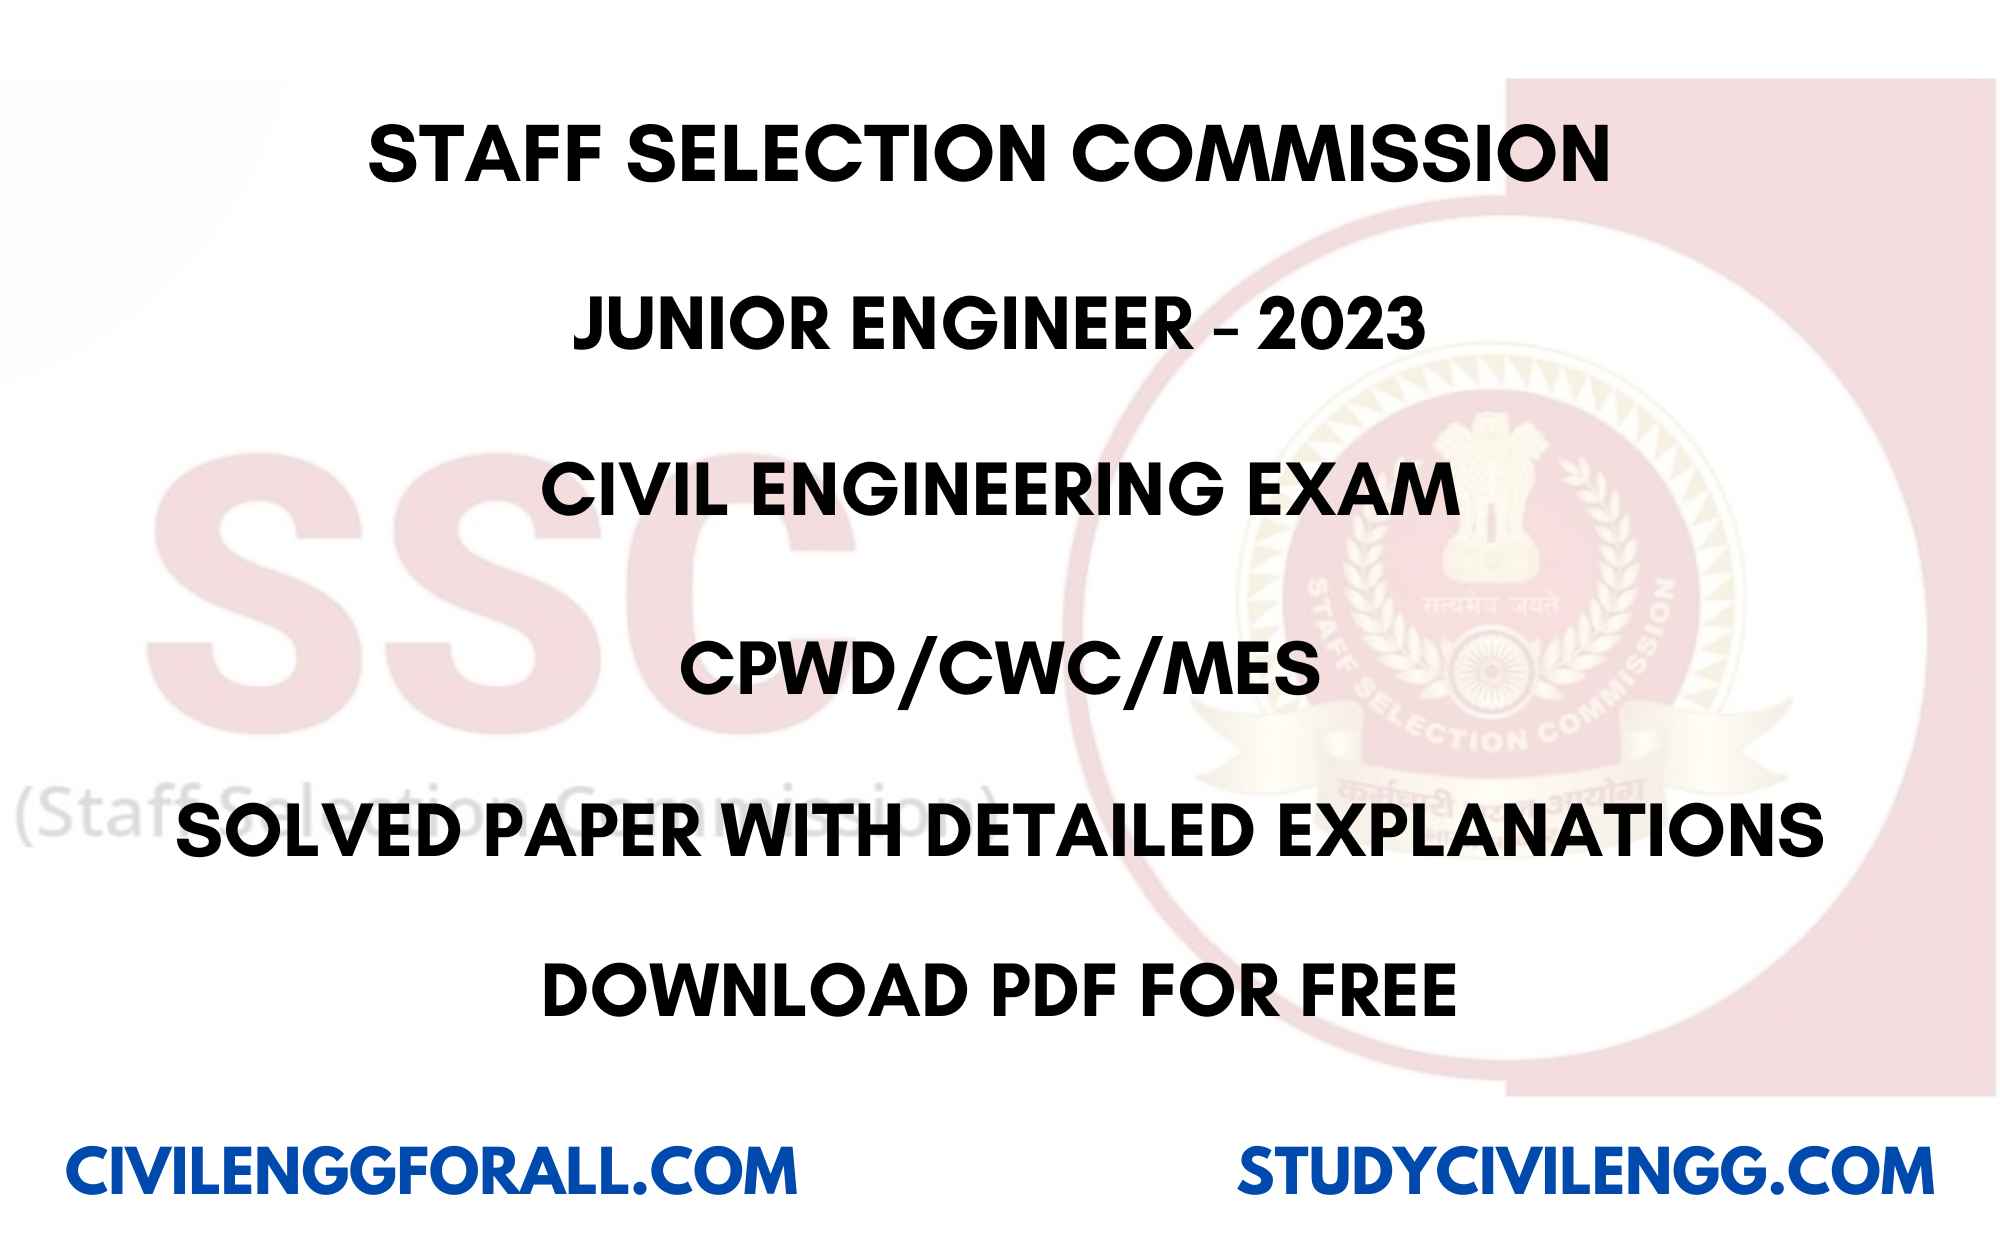 SSC JE CIVIL ENGINEERING 2023 EXAM SOLVED PAPER PDF